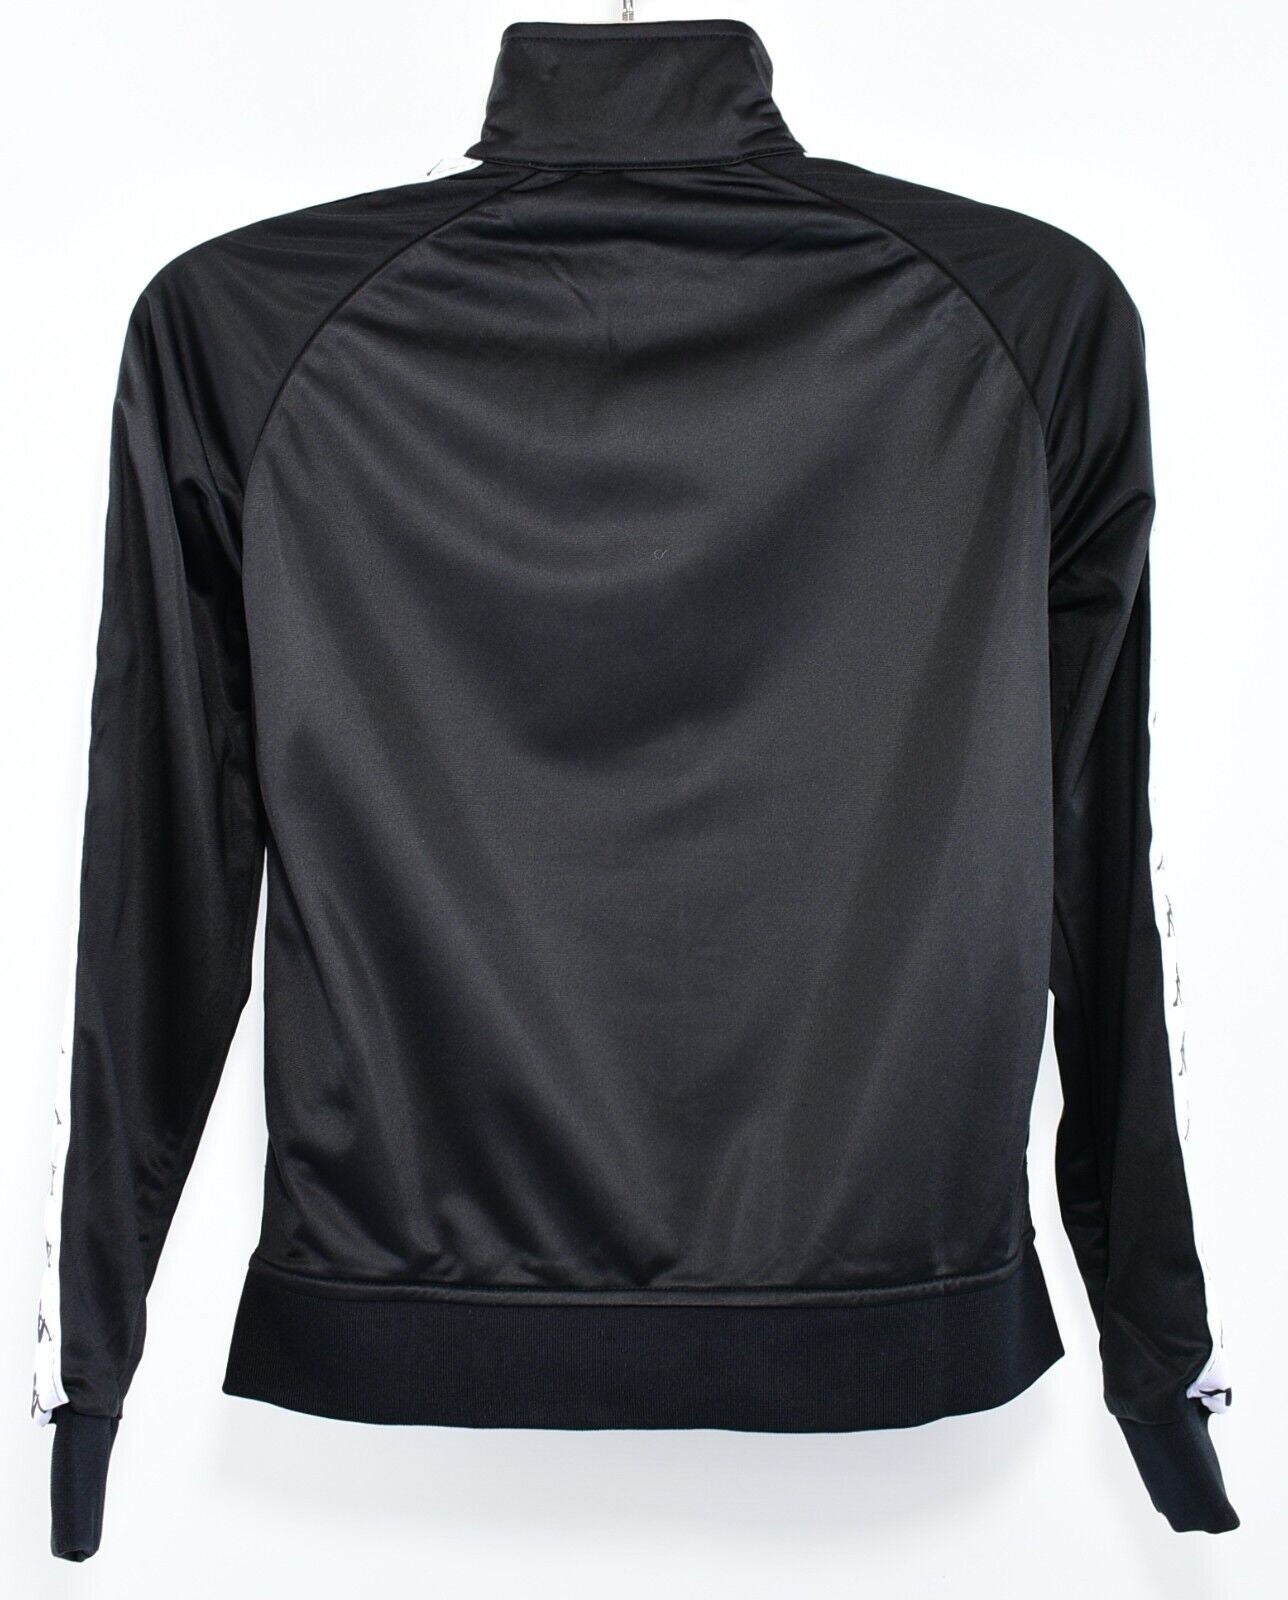 KAPPA Men's Full Zip Track Jacket, Track Suit Top,  SLIM FIT, Black, size SMALL